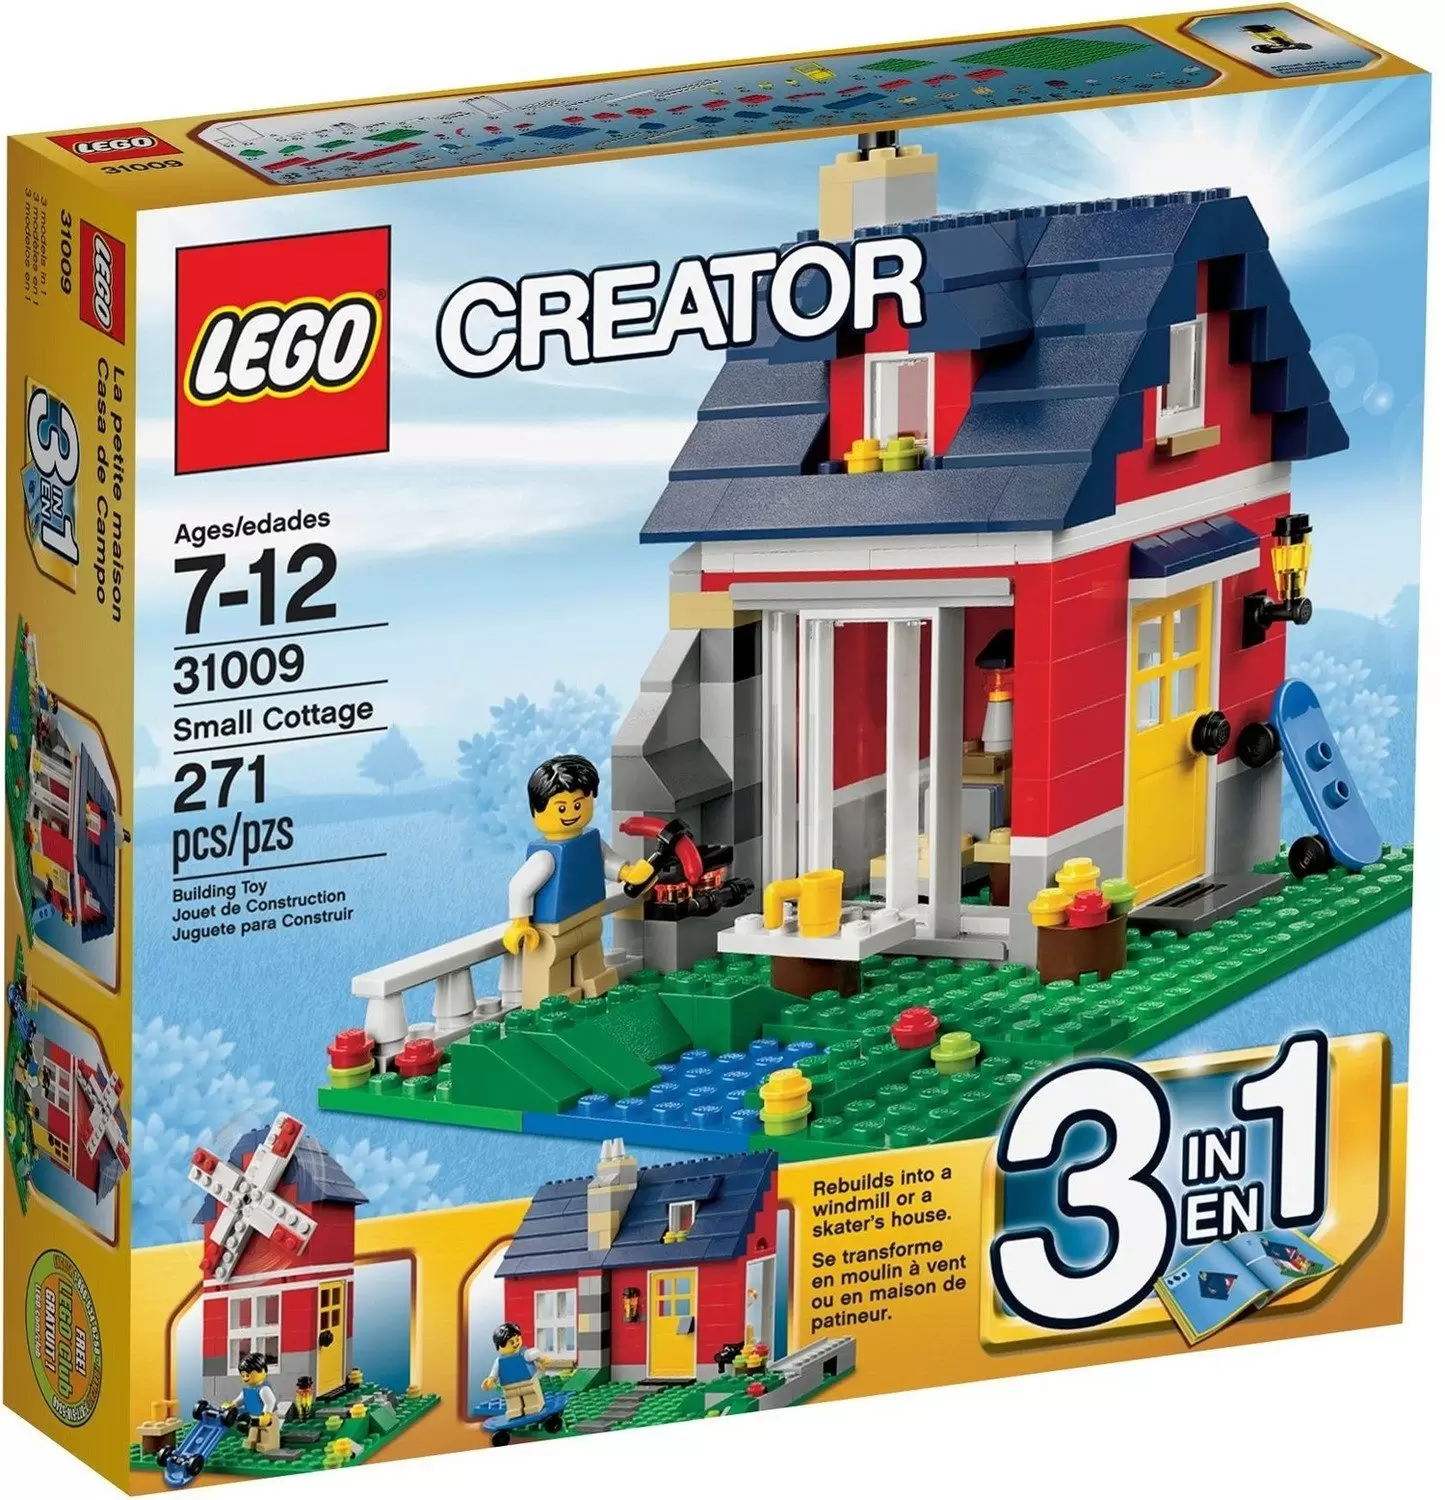 LEGO Creator - Small Cottage